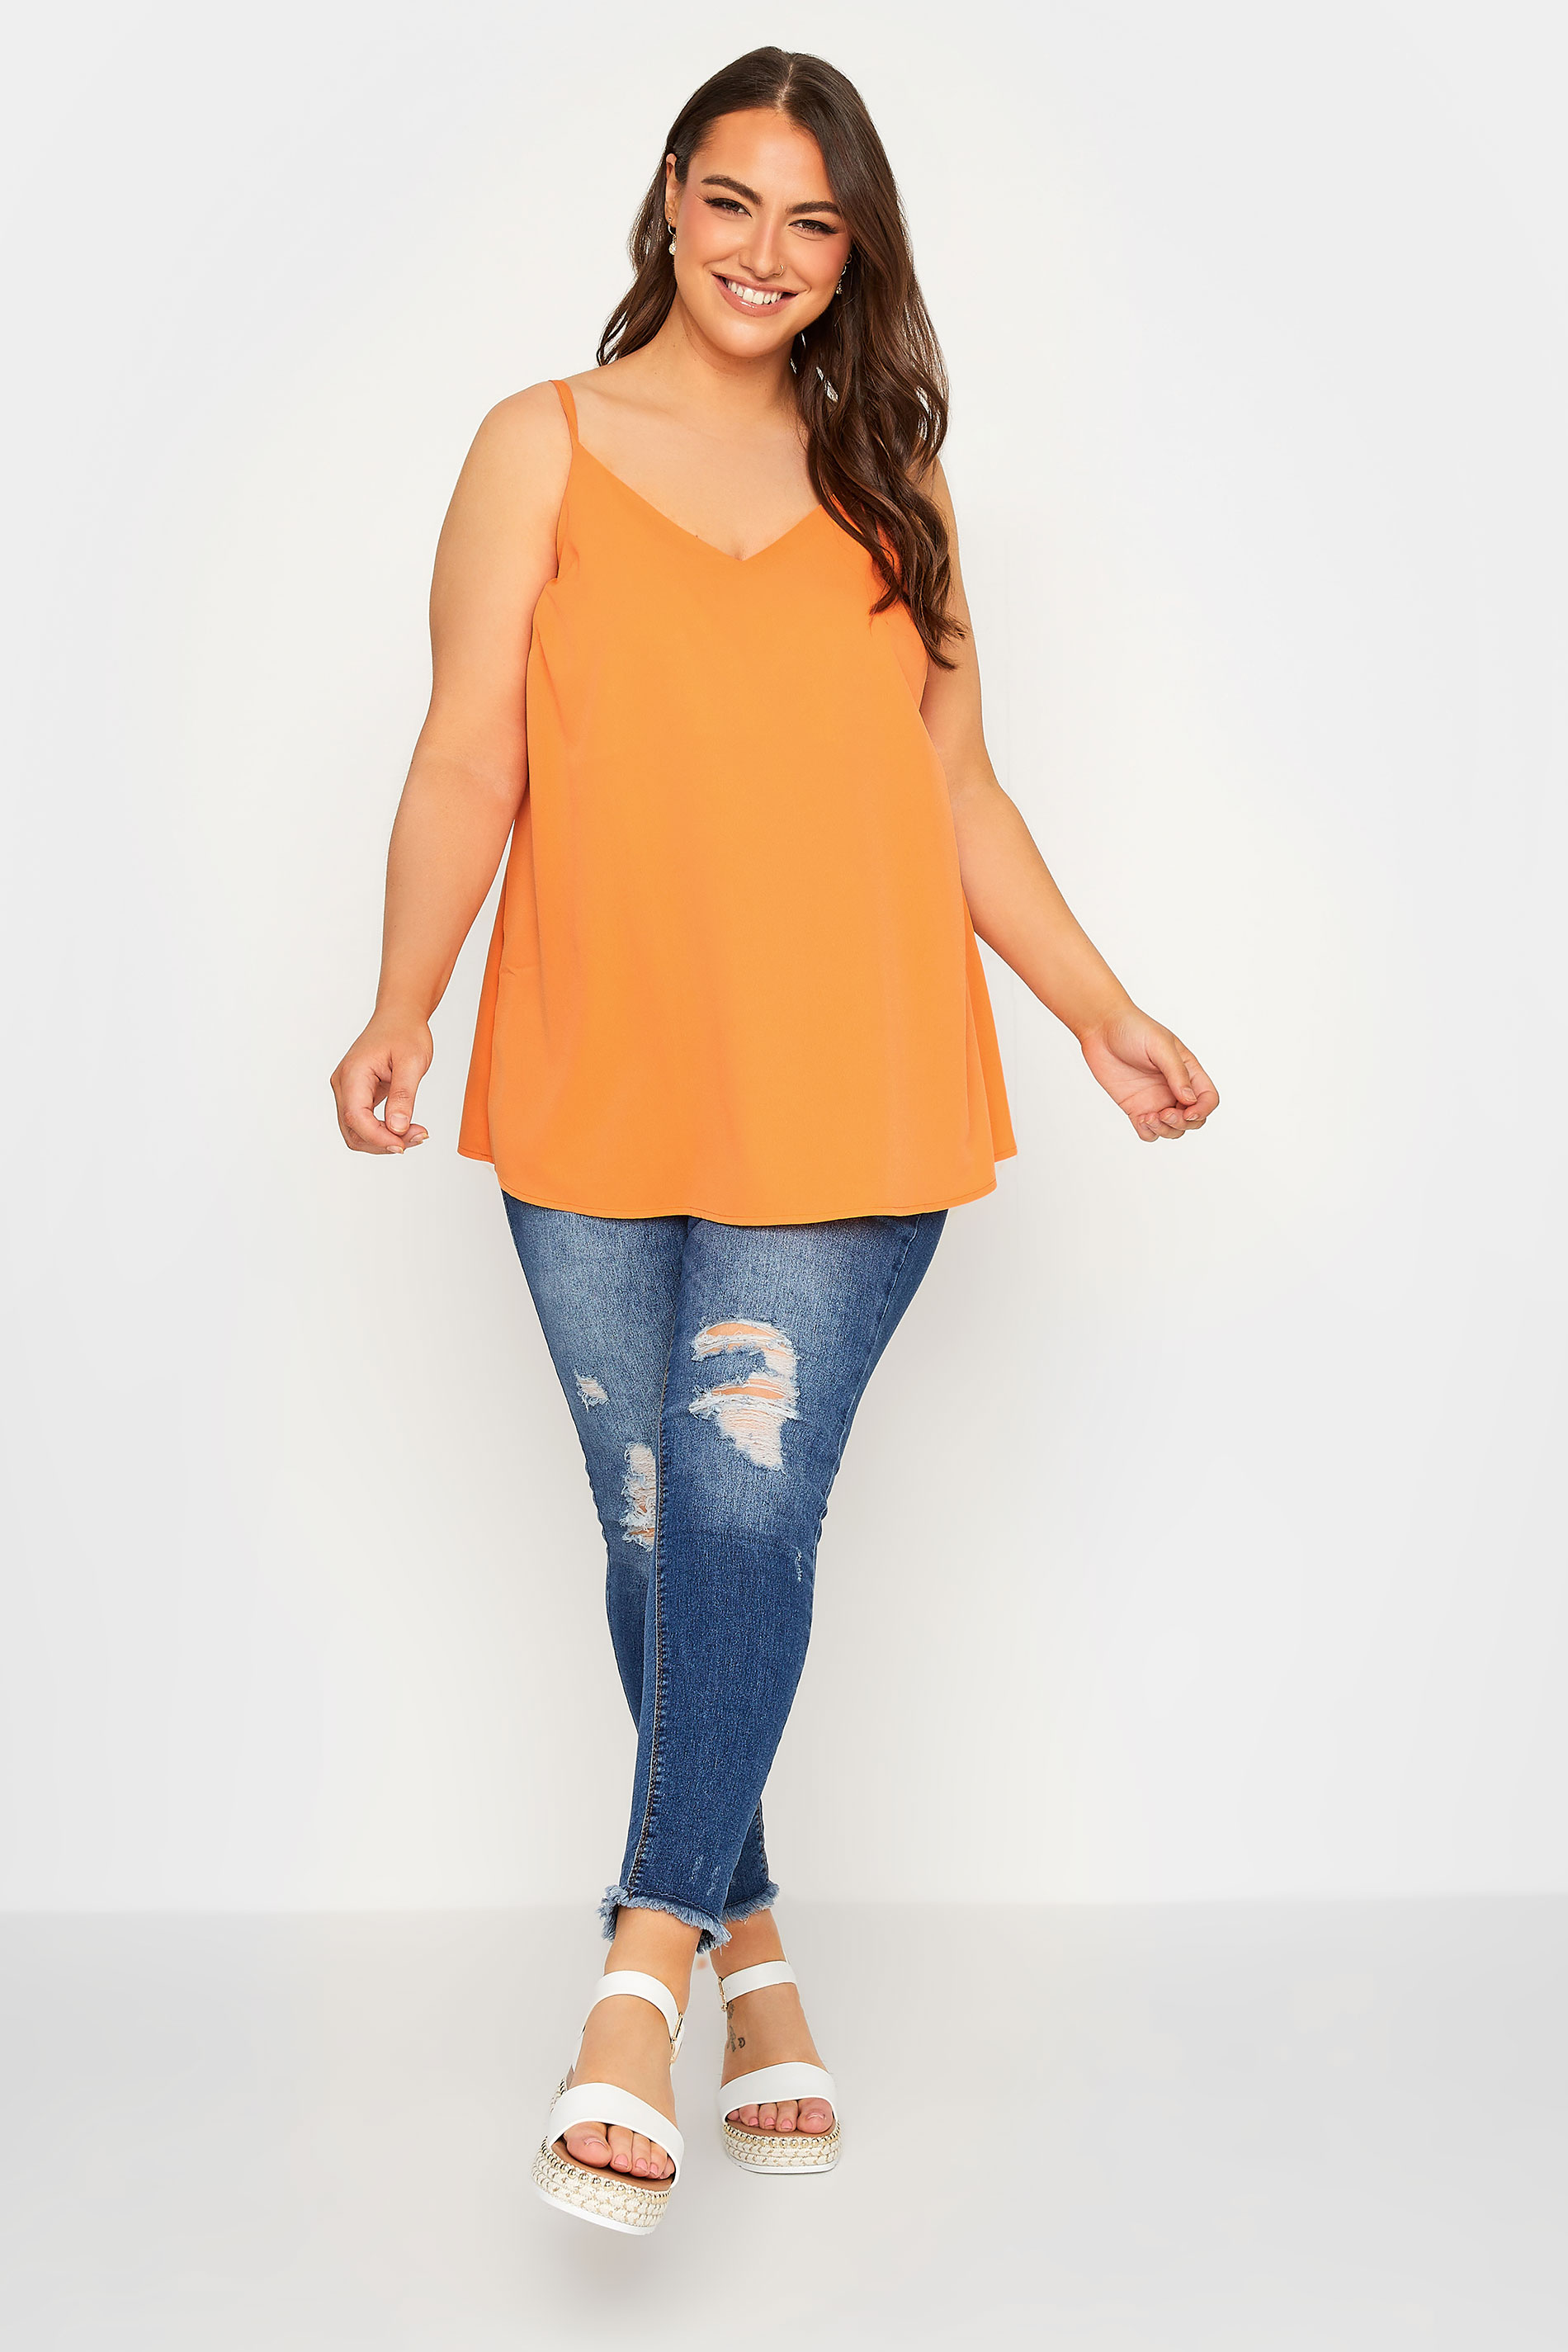 YOURS Curve Plus Size Orange Cami Vest Top | Yours Clothing  2